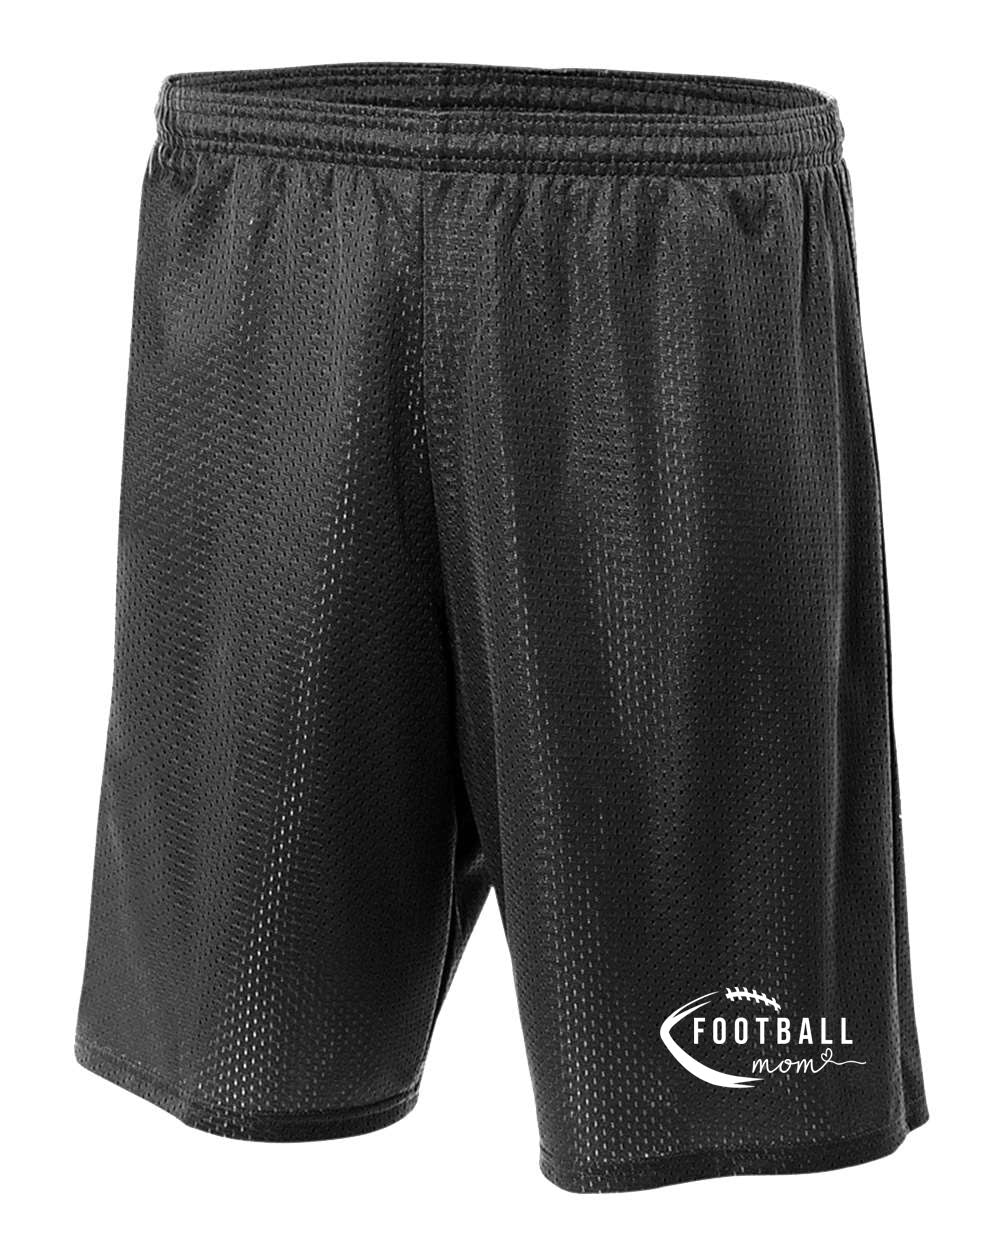 High Point Football Design 5 Shorts